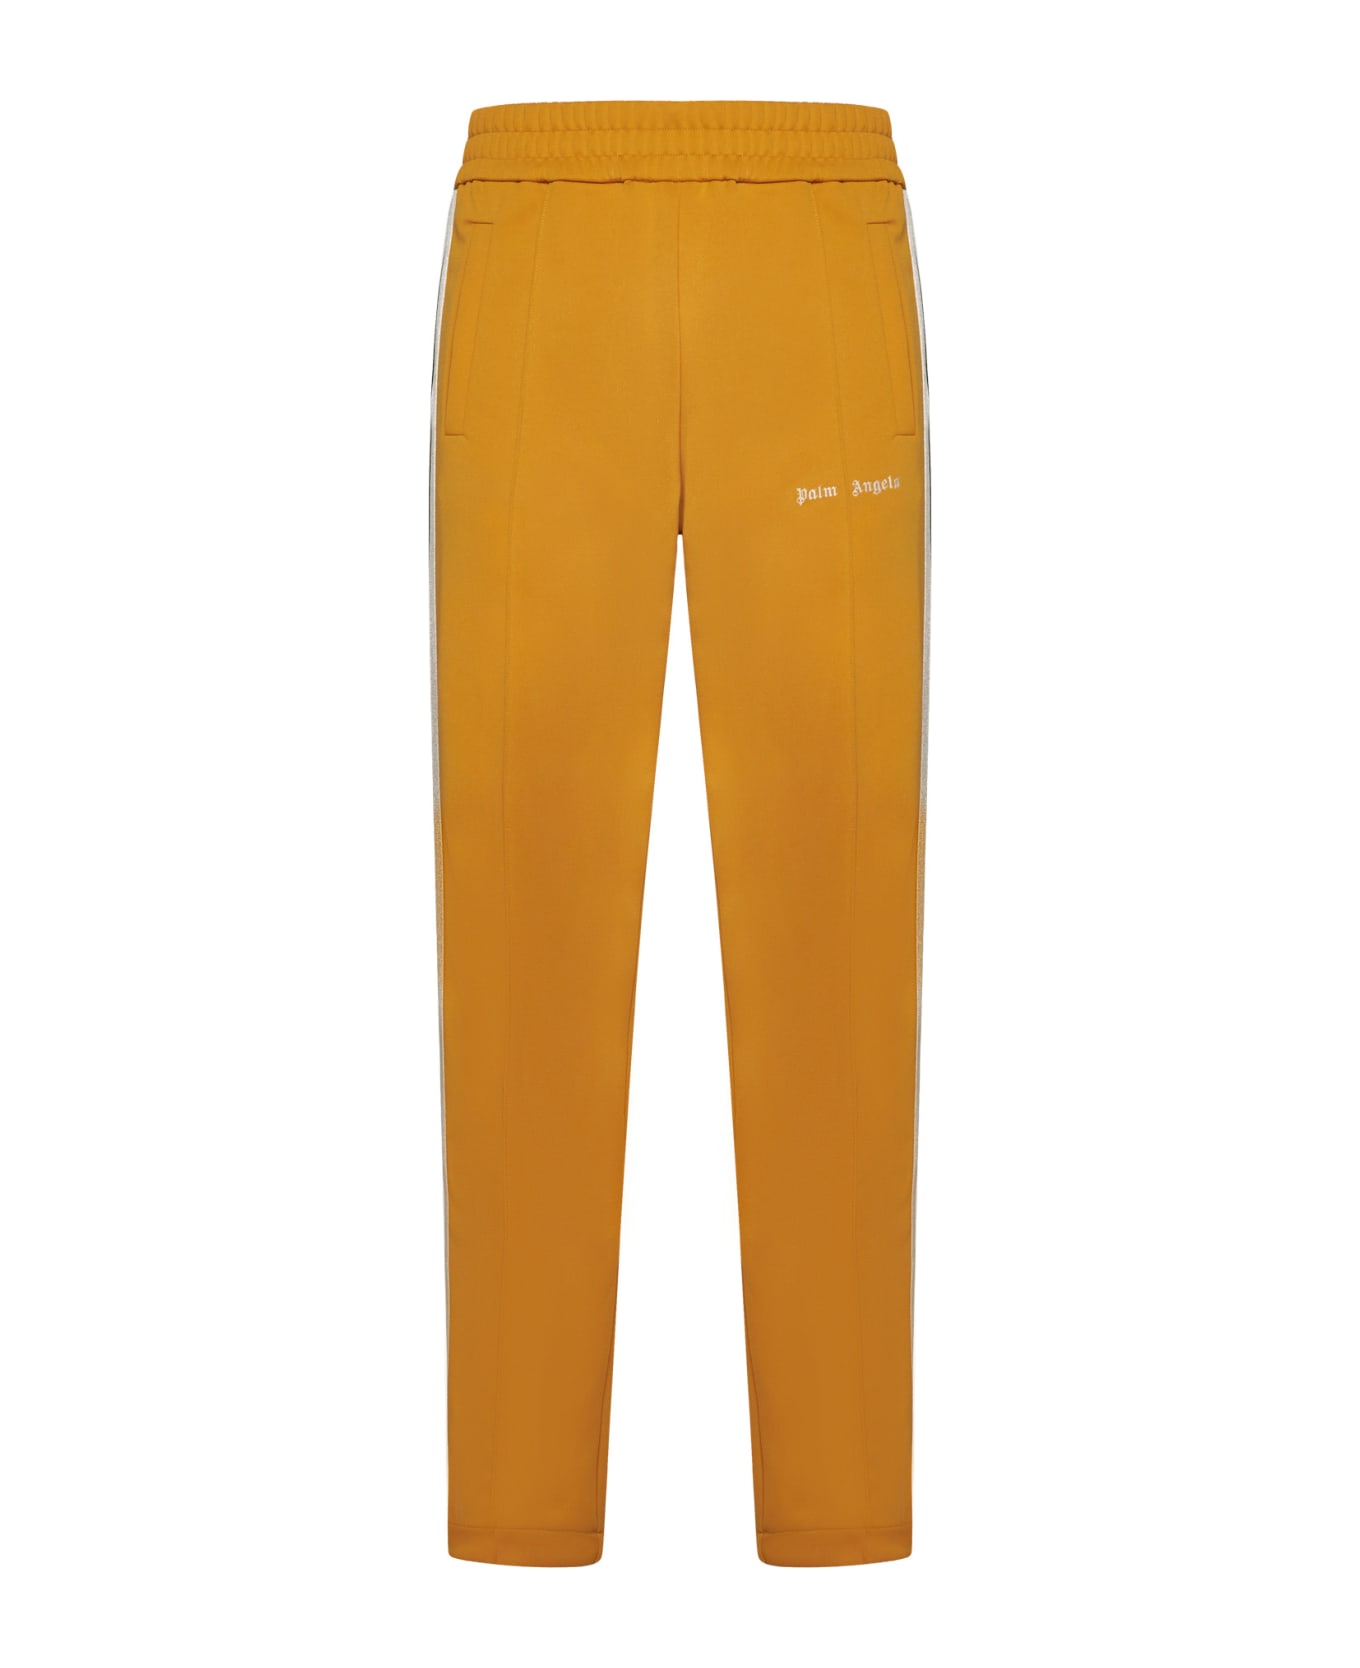 Palm Angels Trouser - Orange